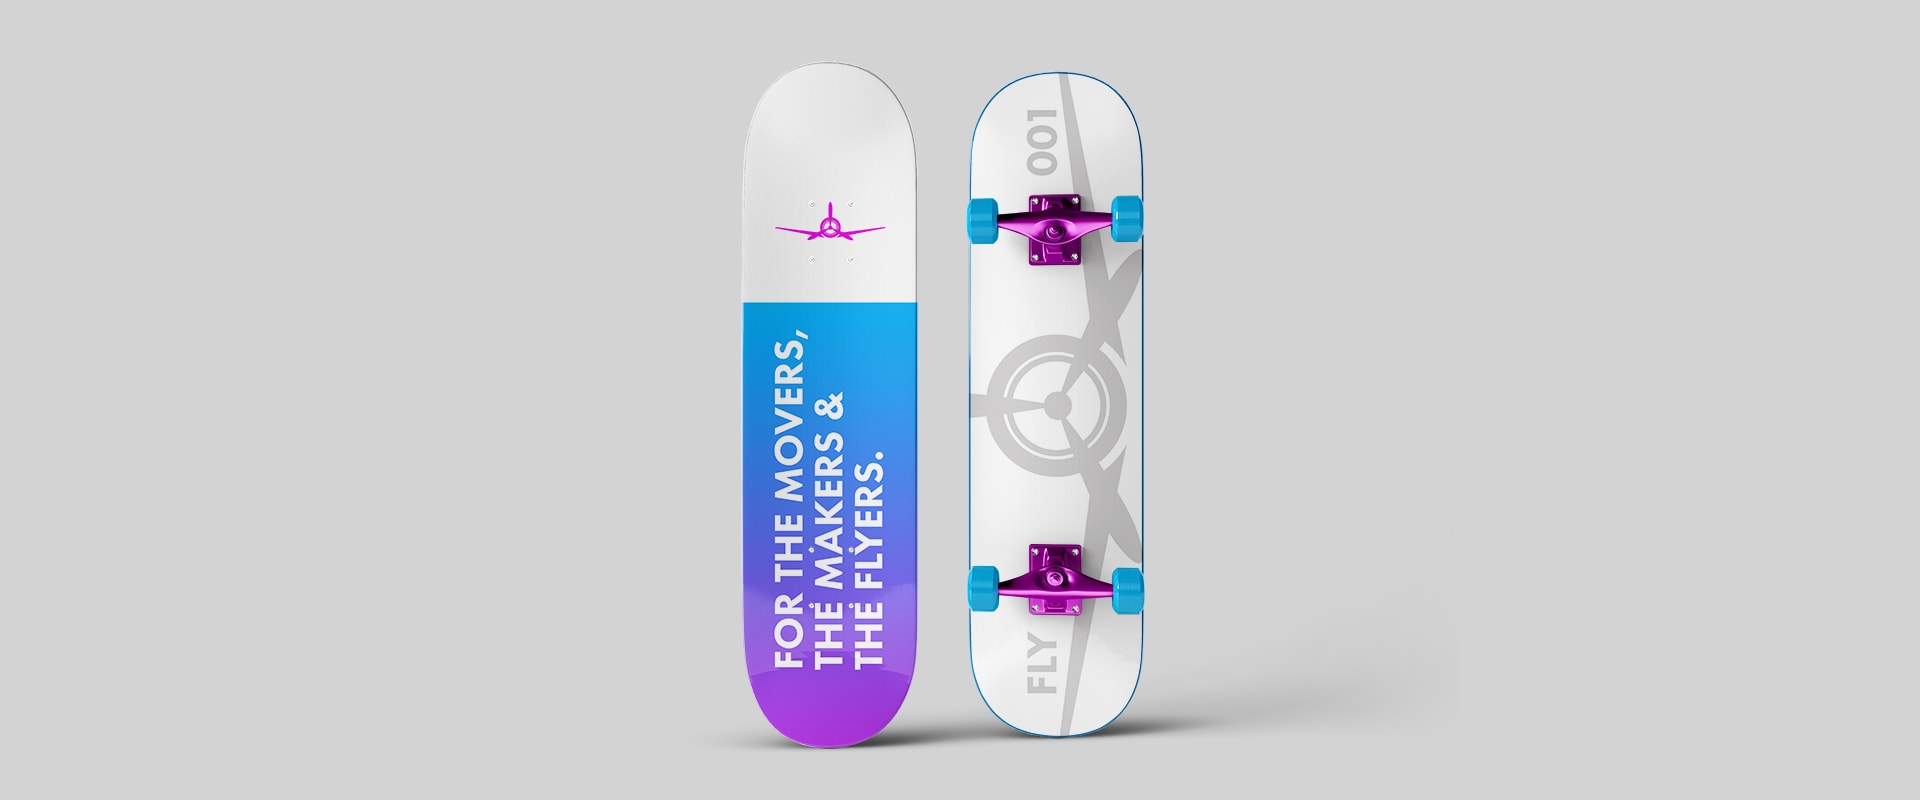 Pilot Group skateboard design by Chris Nunn, Atlanta, Conyers graphic designer